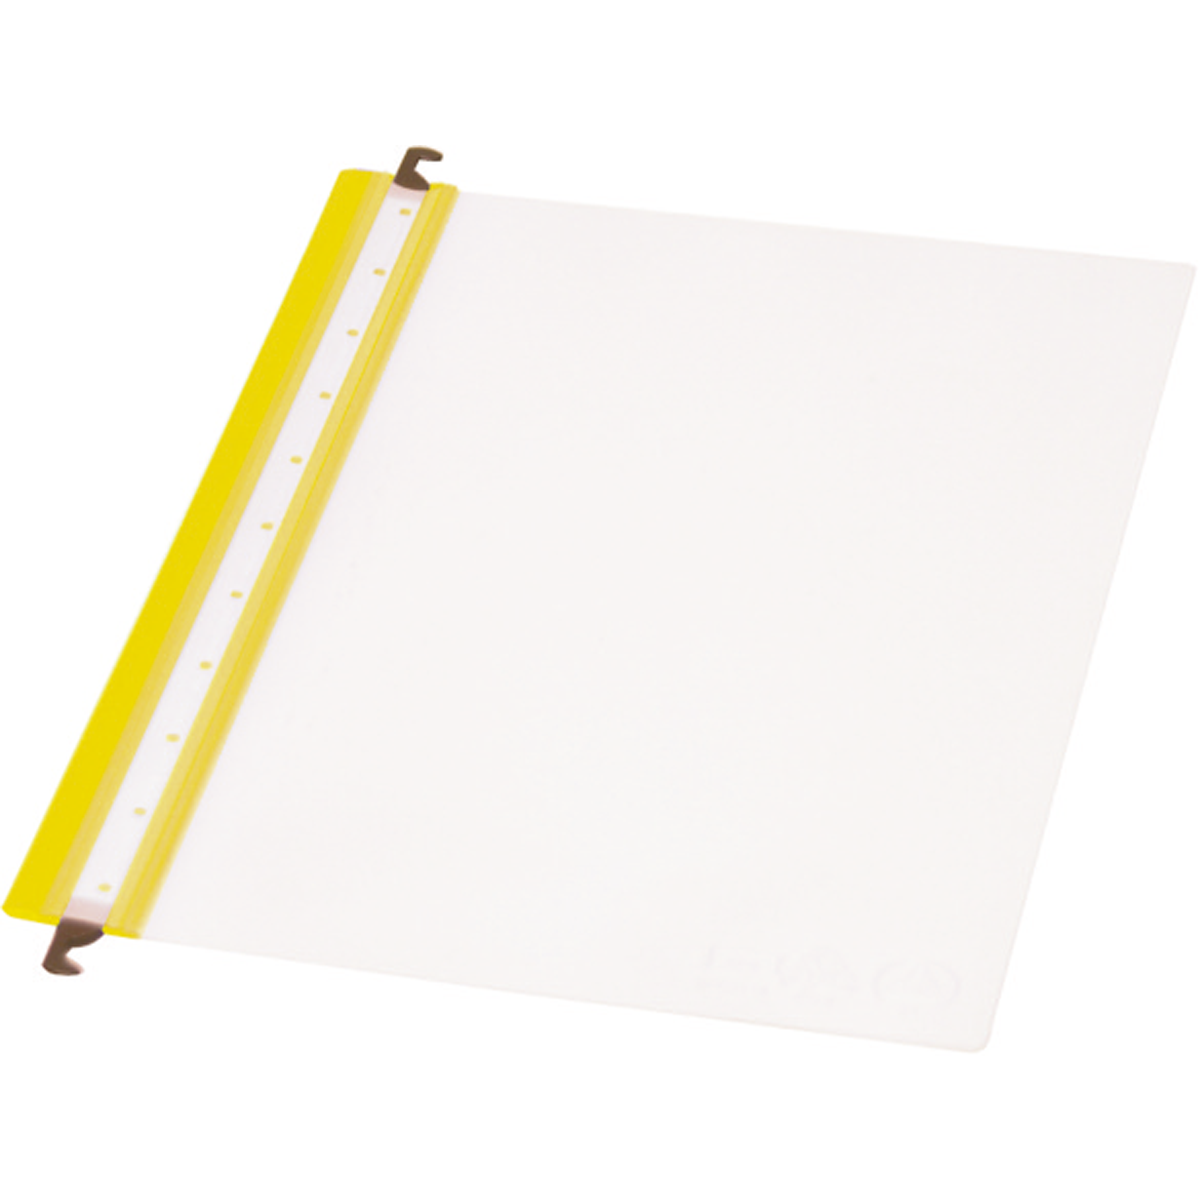 Color:yellow, Description:Suspension file